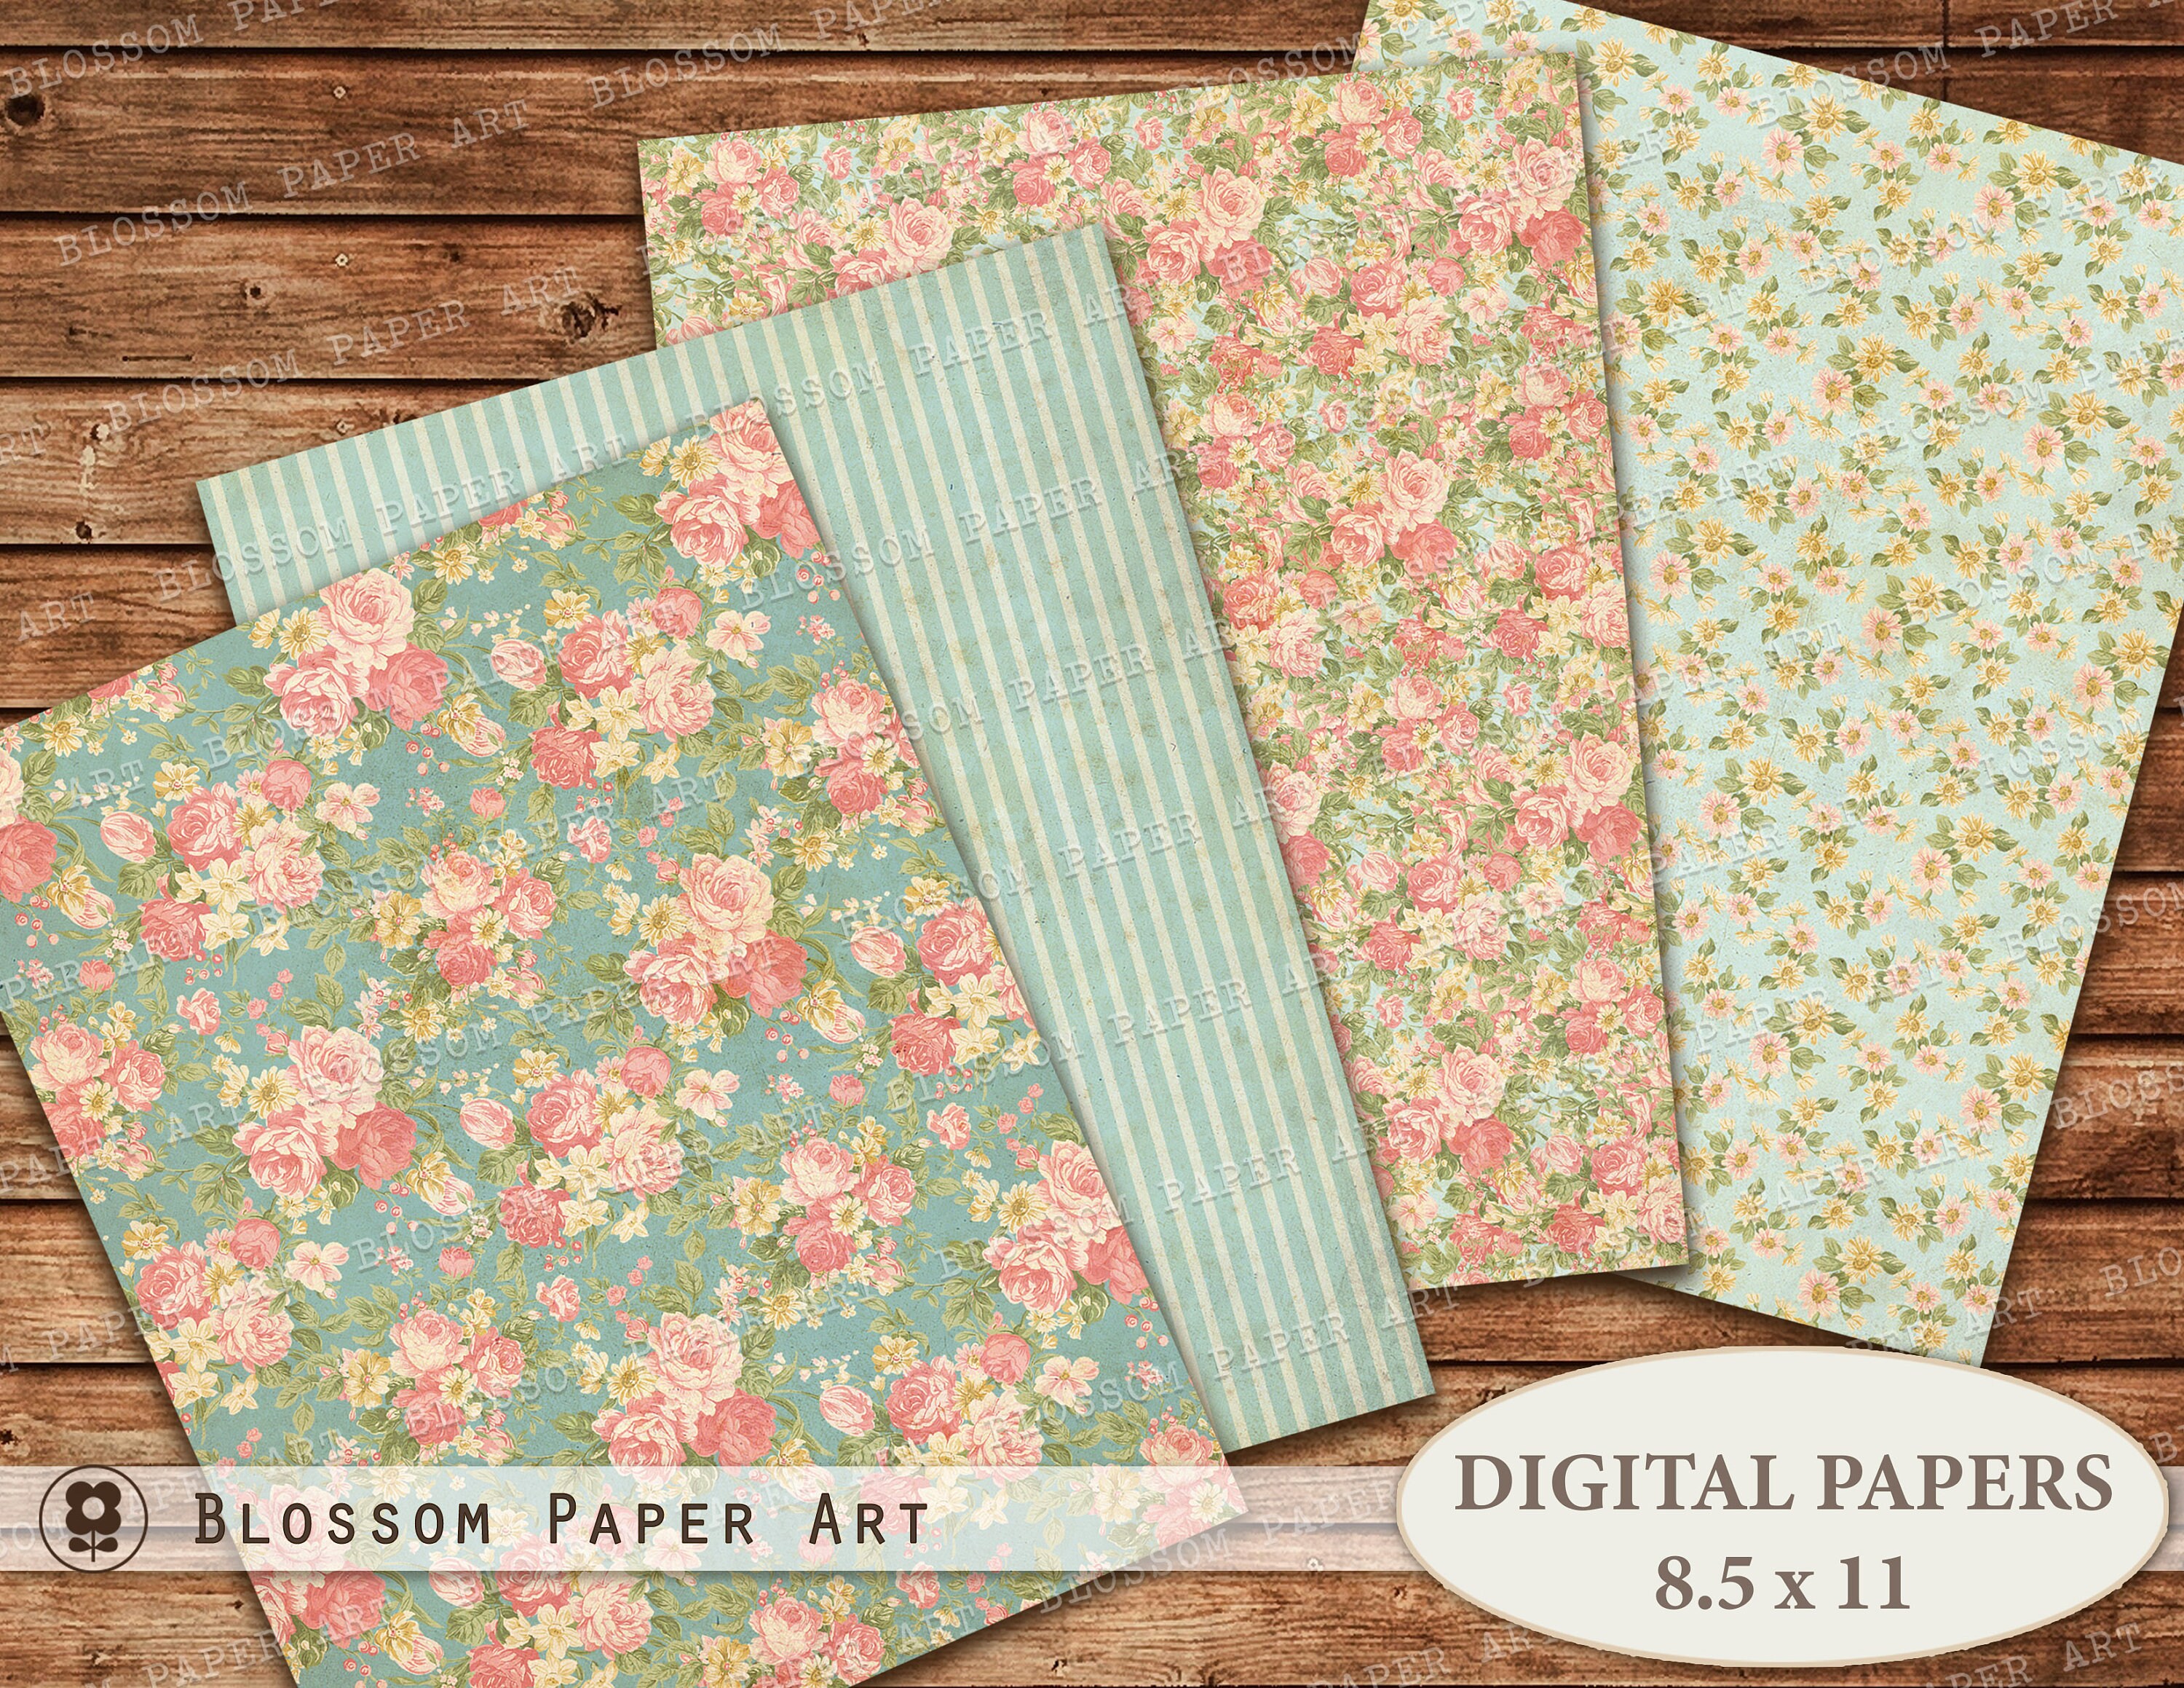 Vintage Flowers Digital Paper 8.5 x 11 Floral scrapbook paper pages By  DigitalPrintableMe